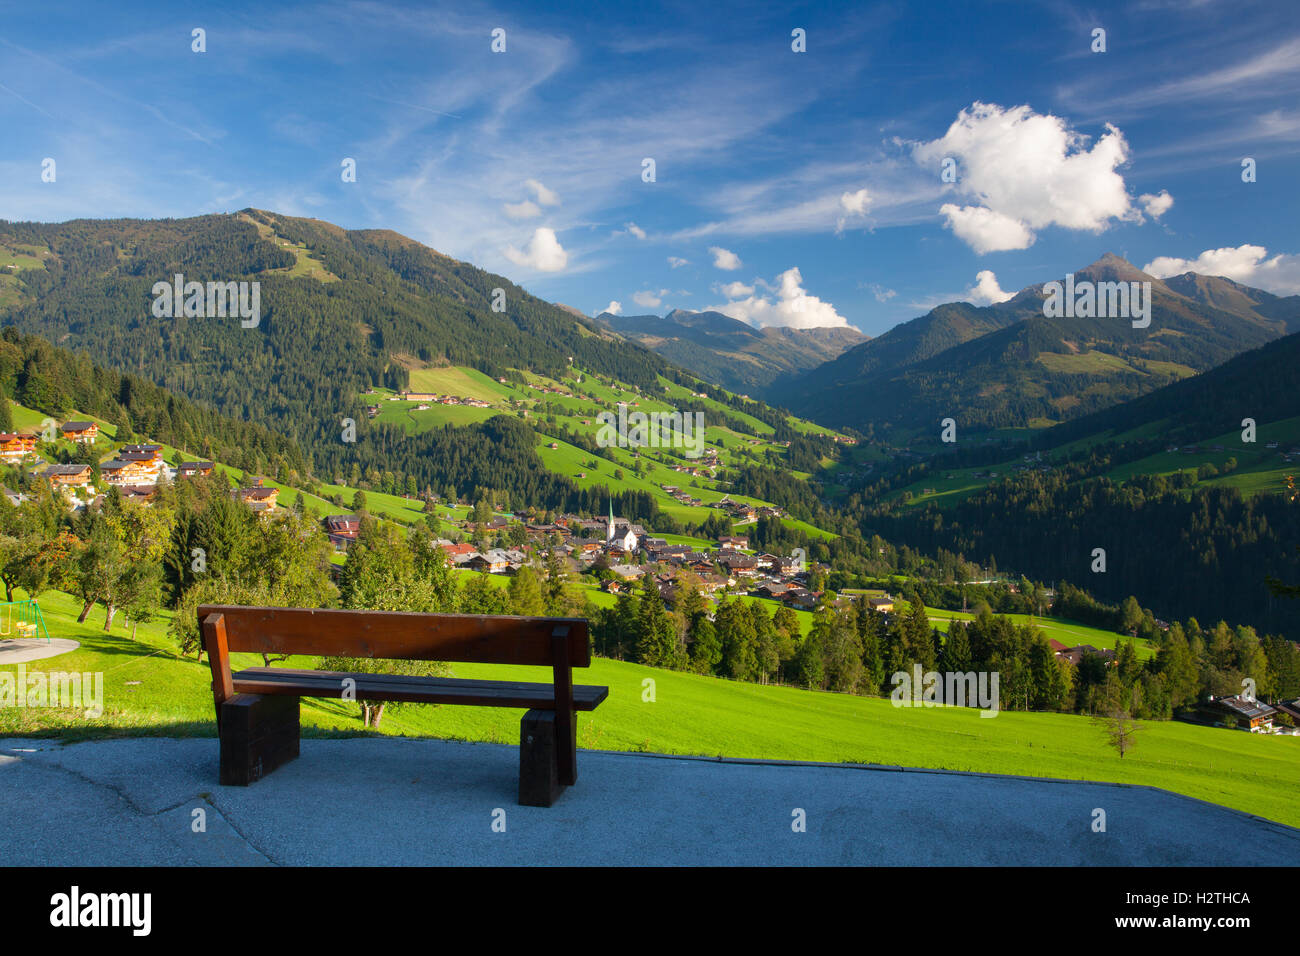 The alpine village of Alpbach and the Alpbachtal (Alpbach valley), Austria. Stock Photo